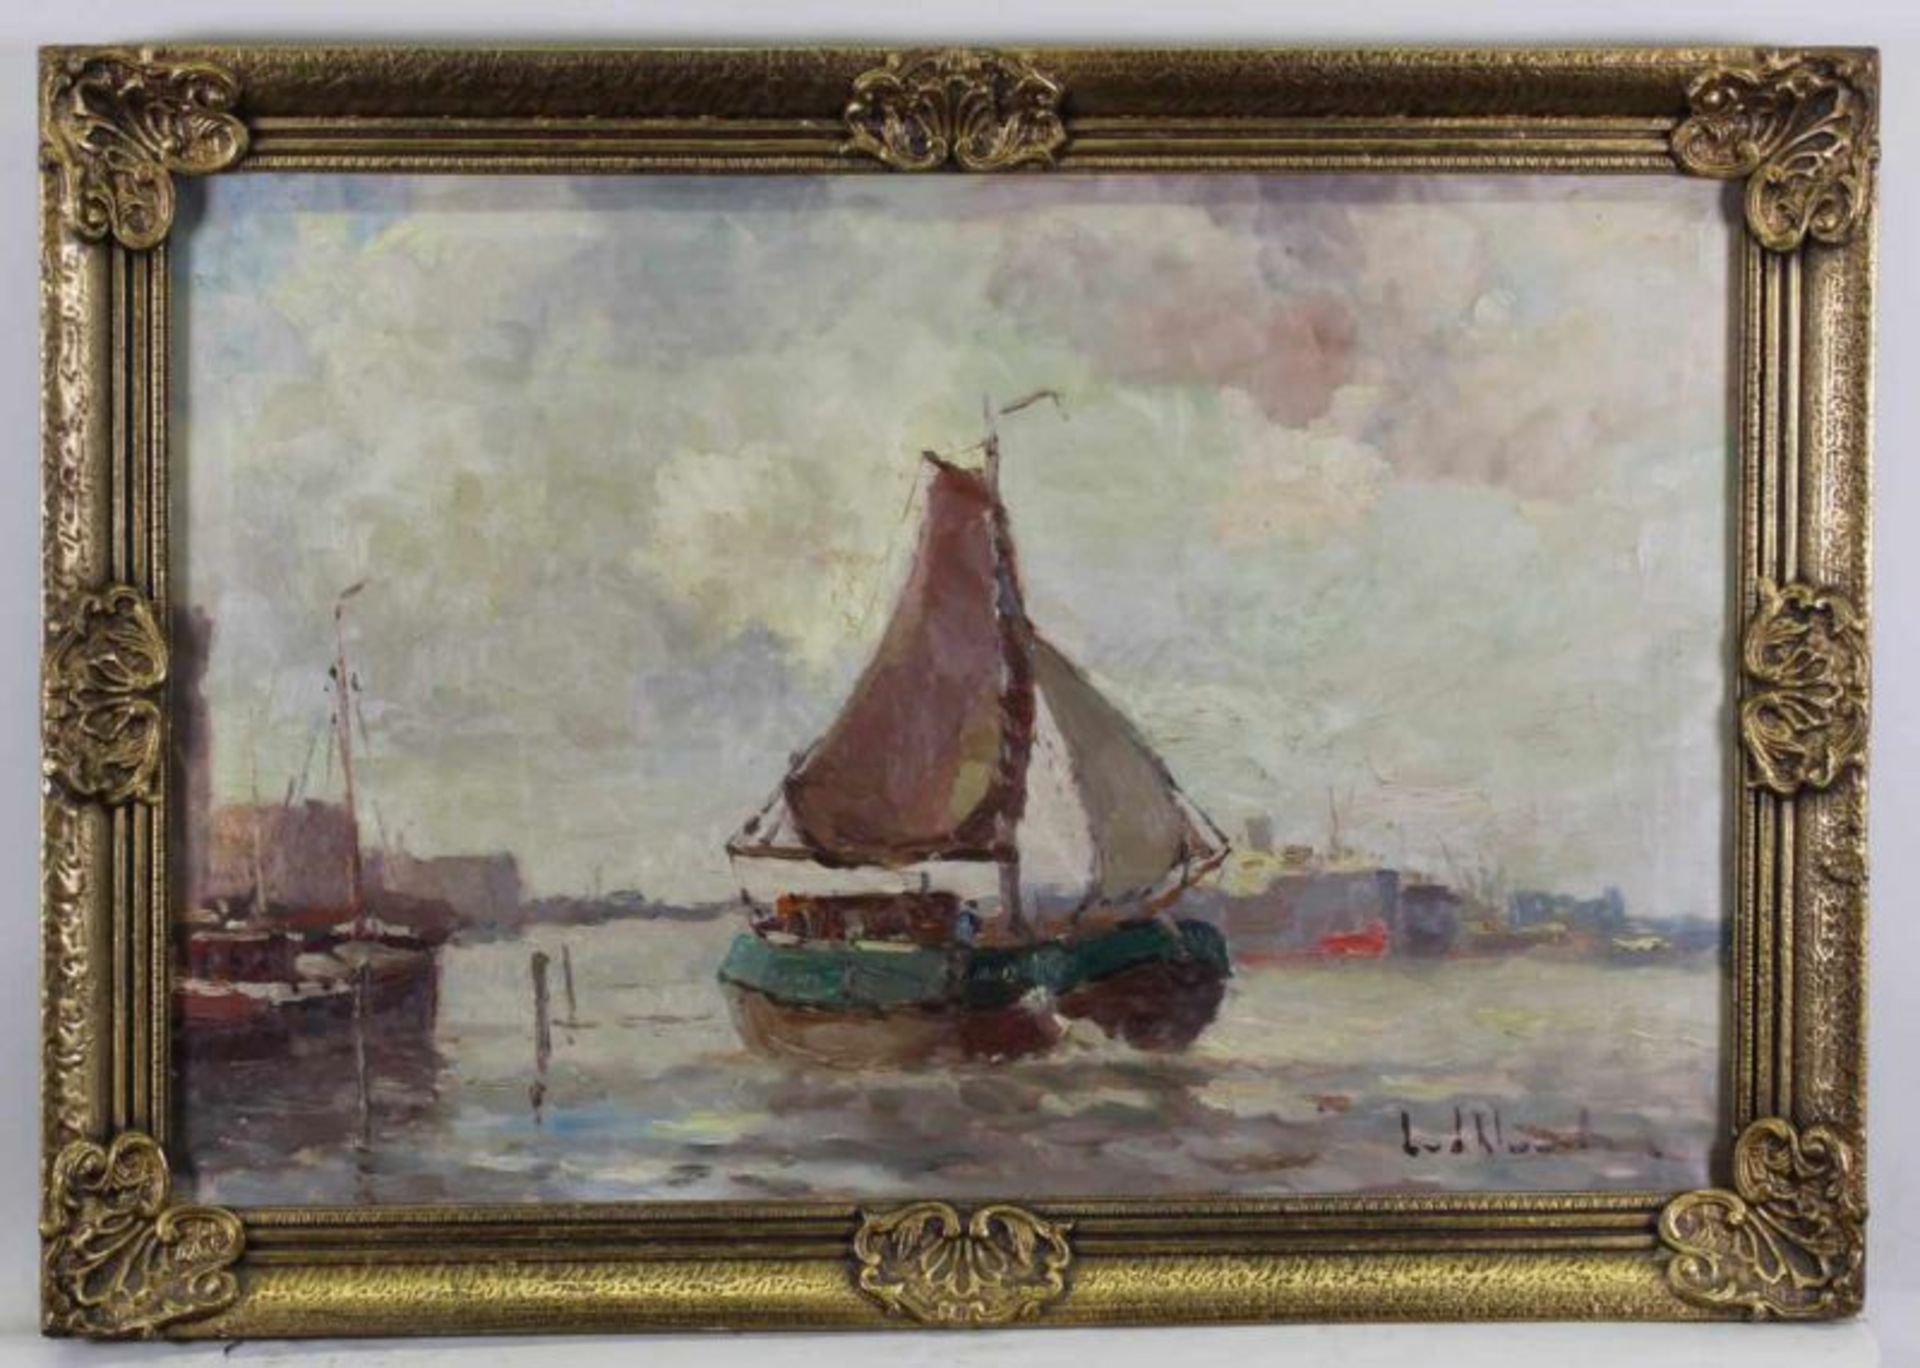 Unbekannter Maler (20. Jh.), "Segelschiff", Öl auf Leinwand, unten rechts Lud. Klu..., 40 x 61 cm - Image 2 of 4